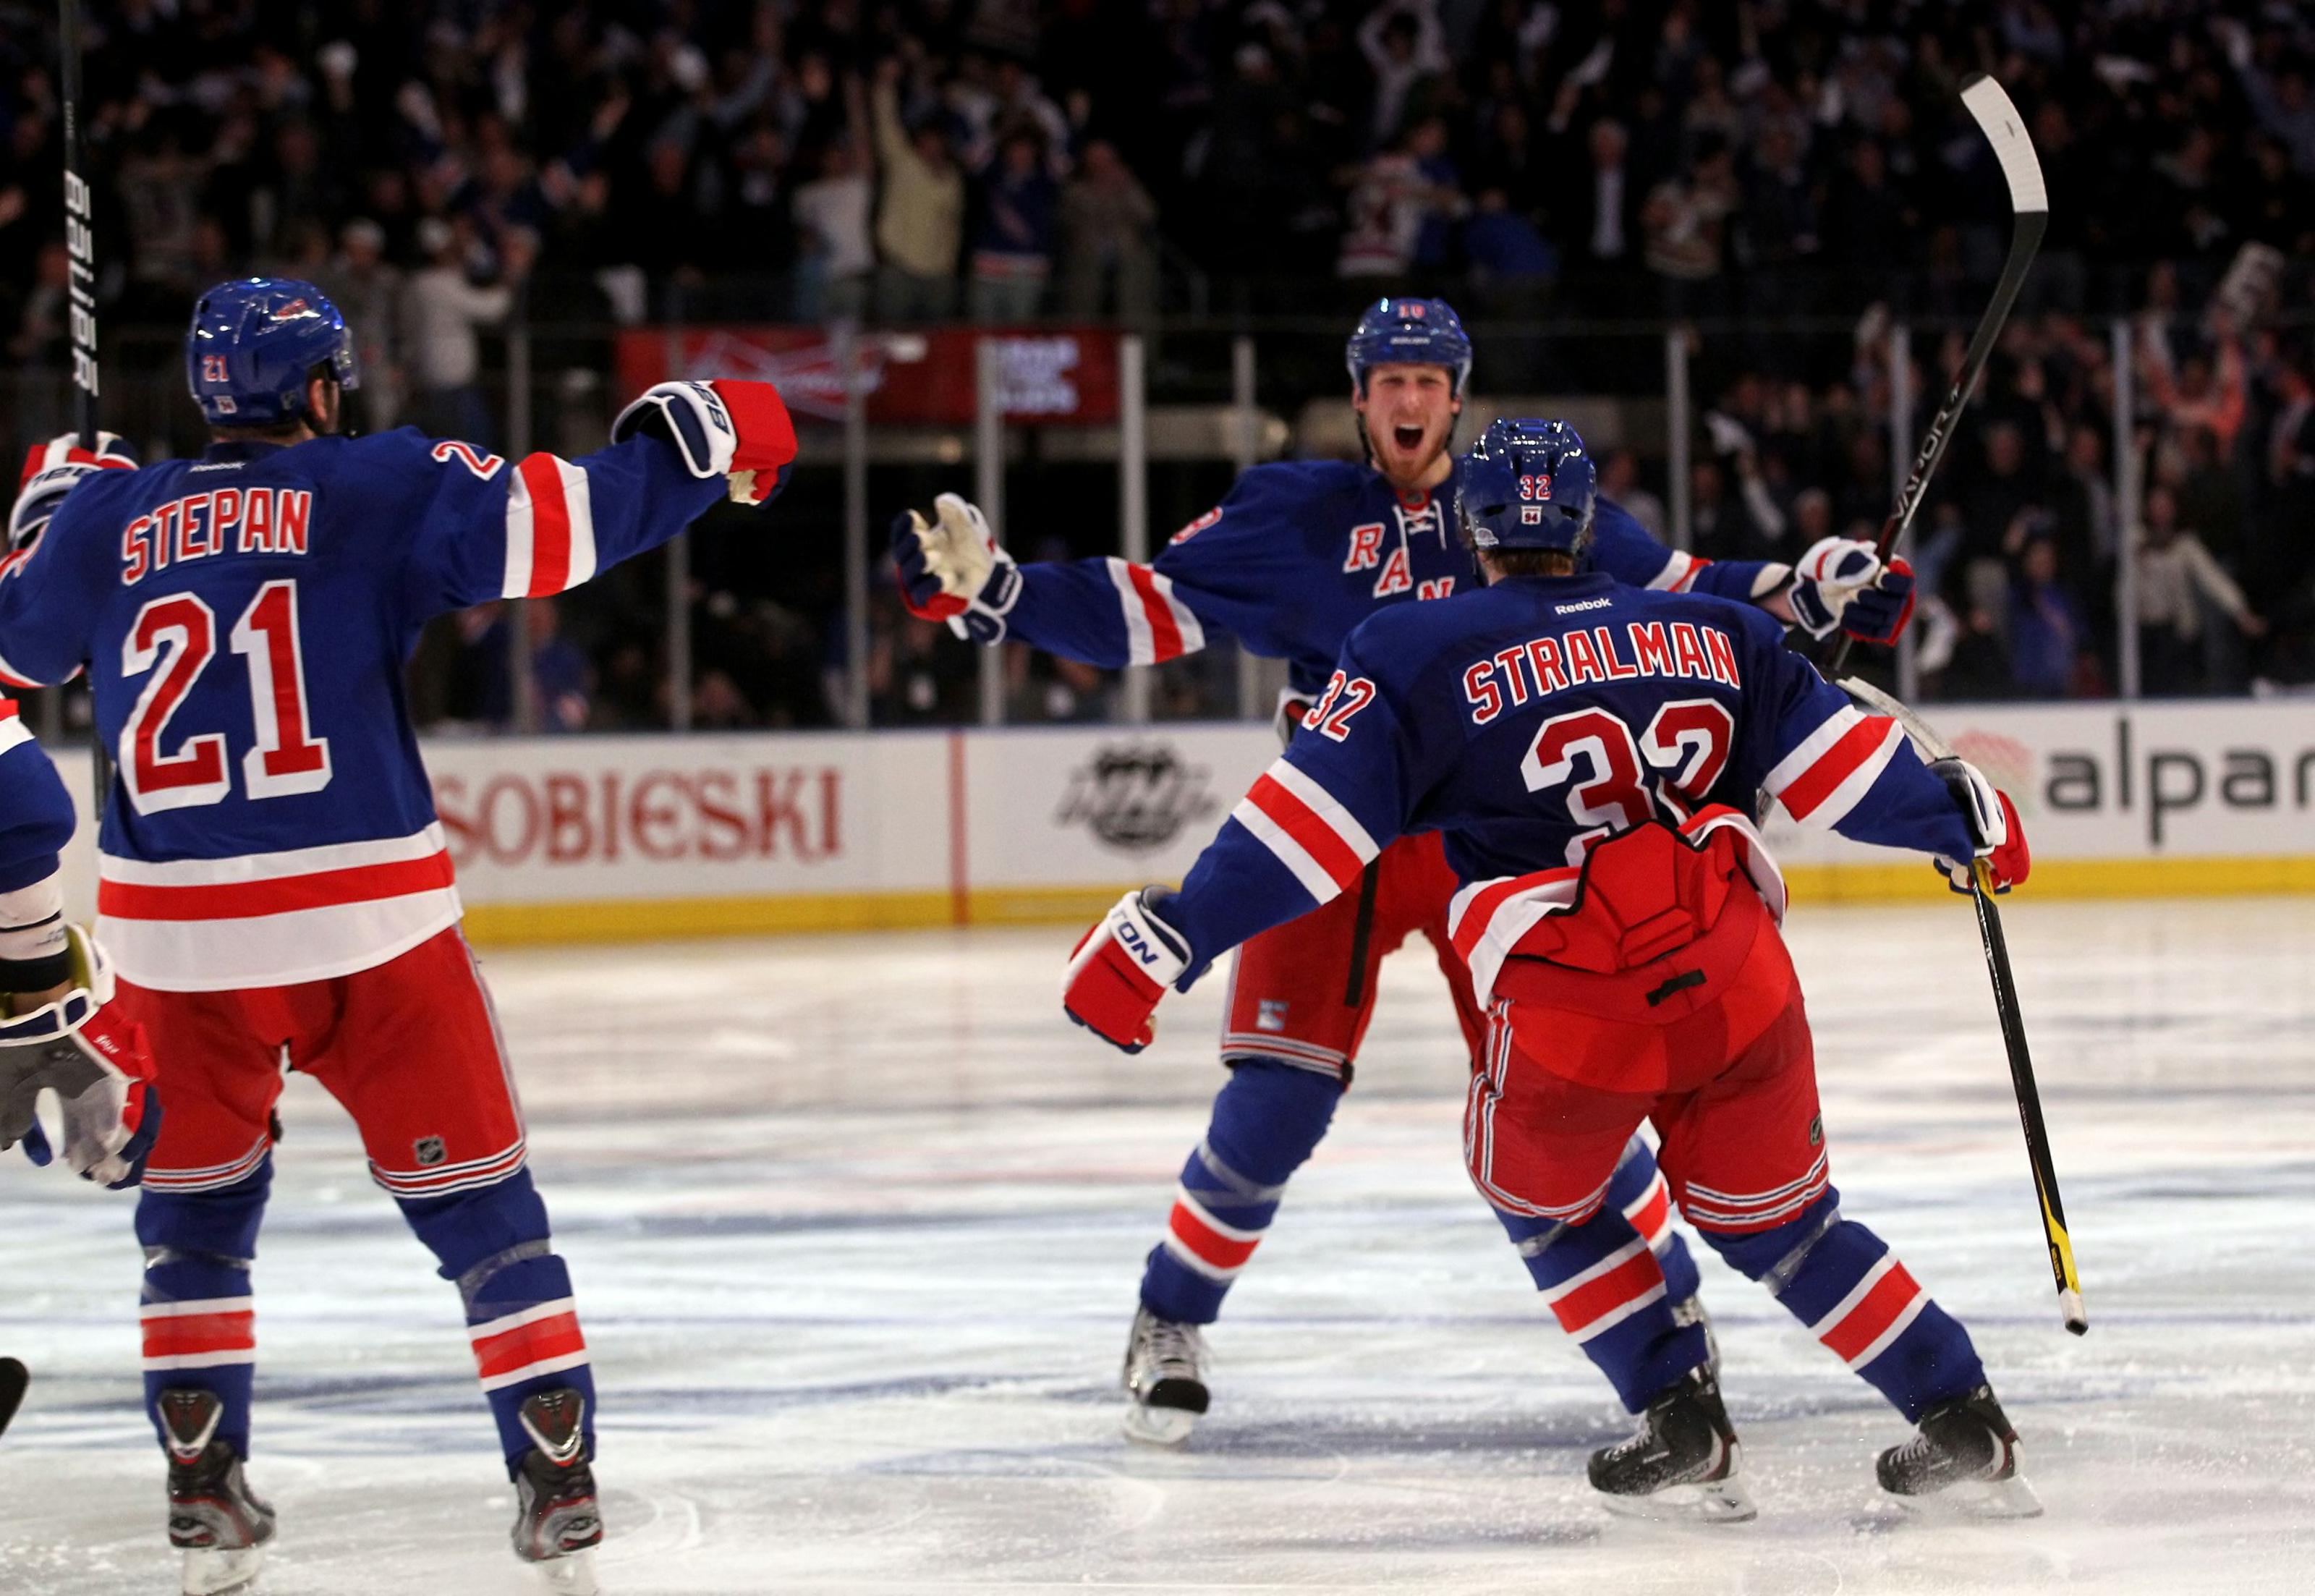 Brad Richards Signed Reebok New York Rangers 2014 Stanley Cup